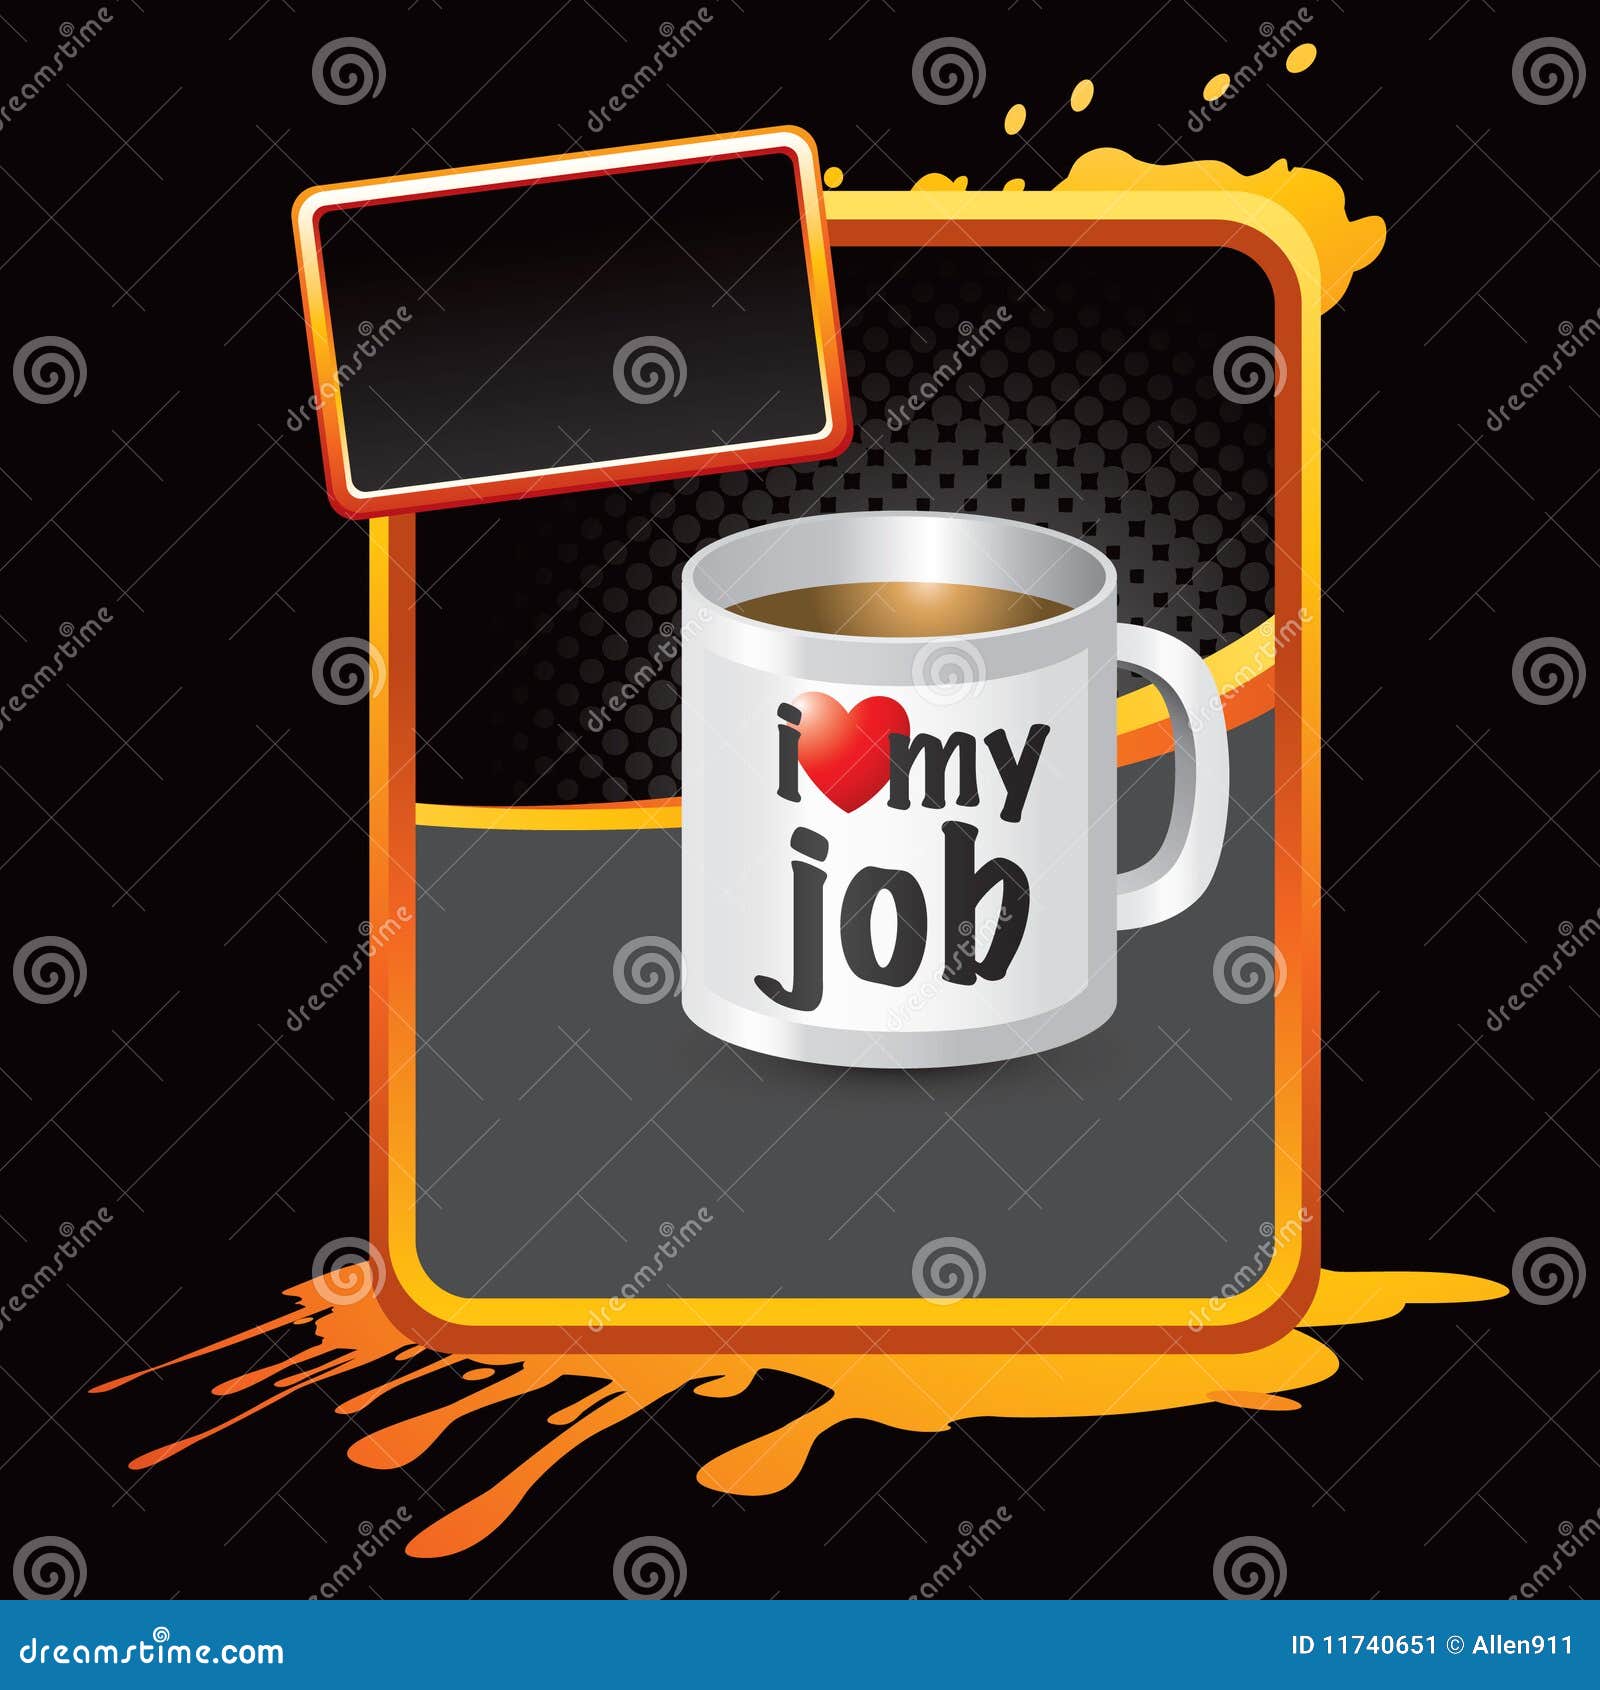 https://thumbs.dreamstime.com/z/i-love-my-job-coffee-mug-orange-grungy-ad-11740651.jpg